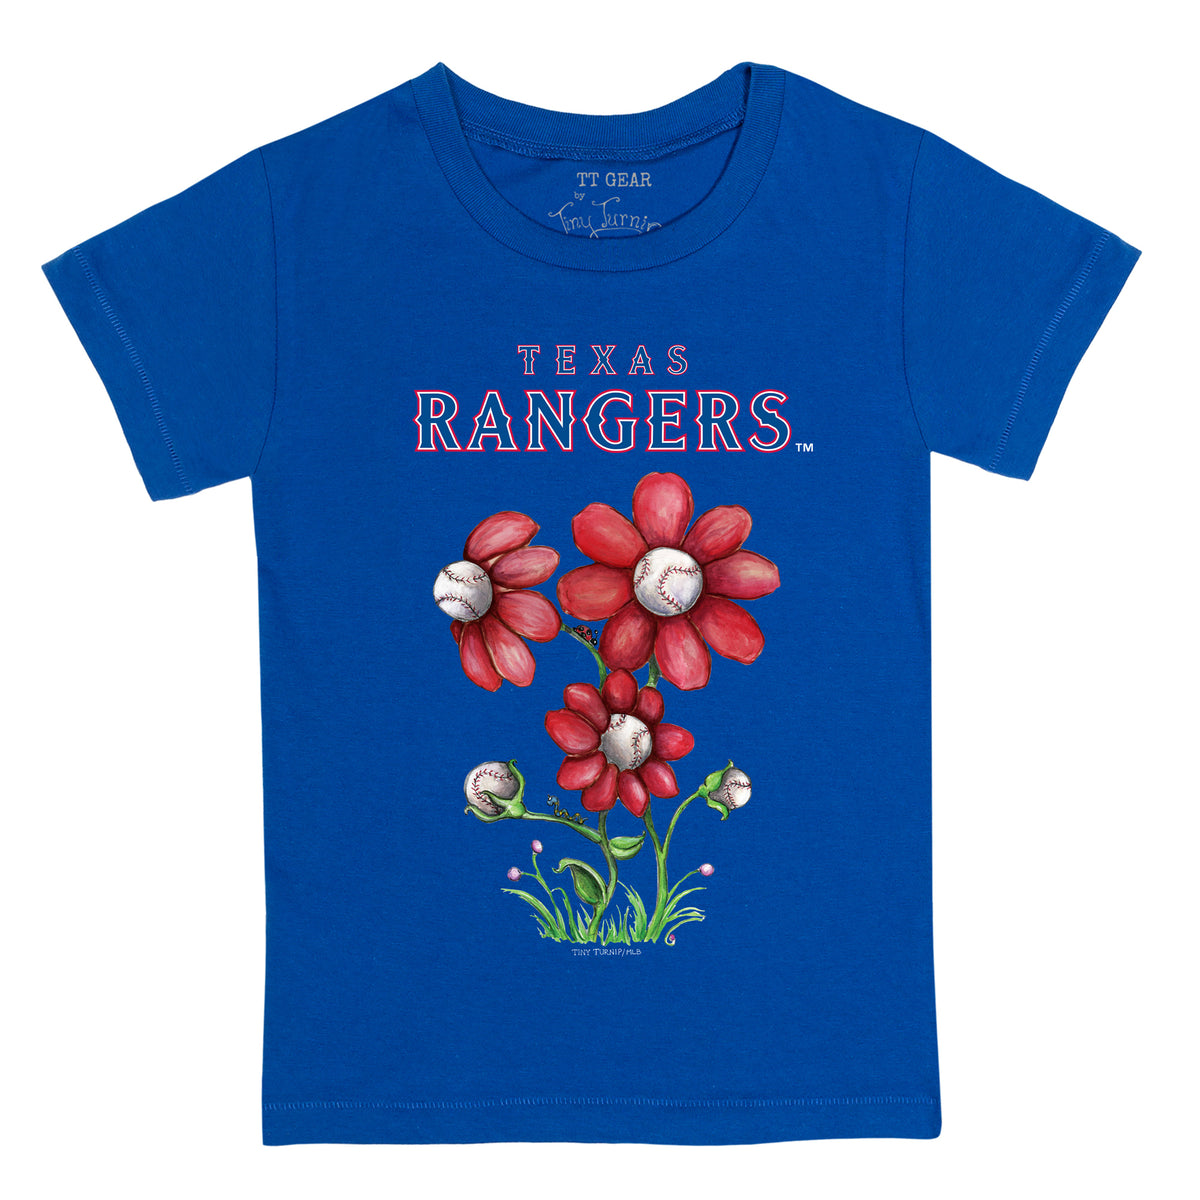 Texas Rangers Blooming Baseballs Tee Shirt 2T / Royal Blue